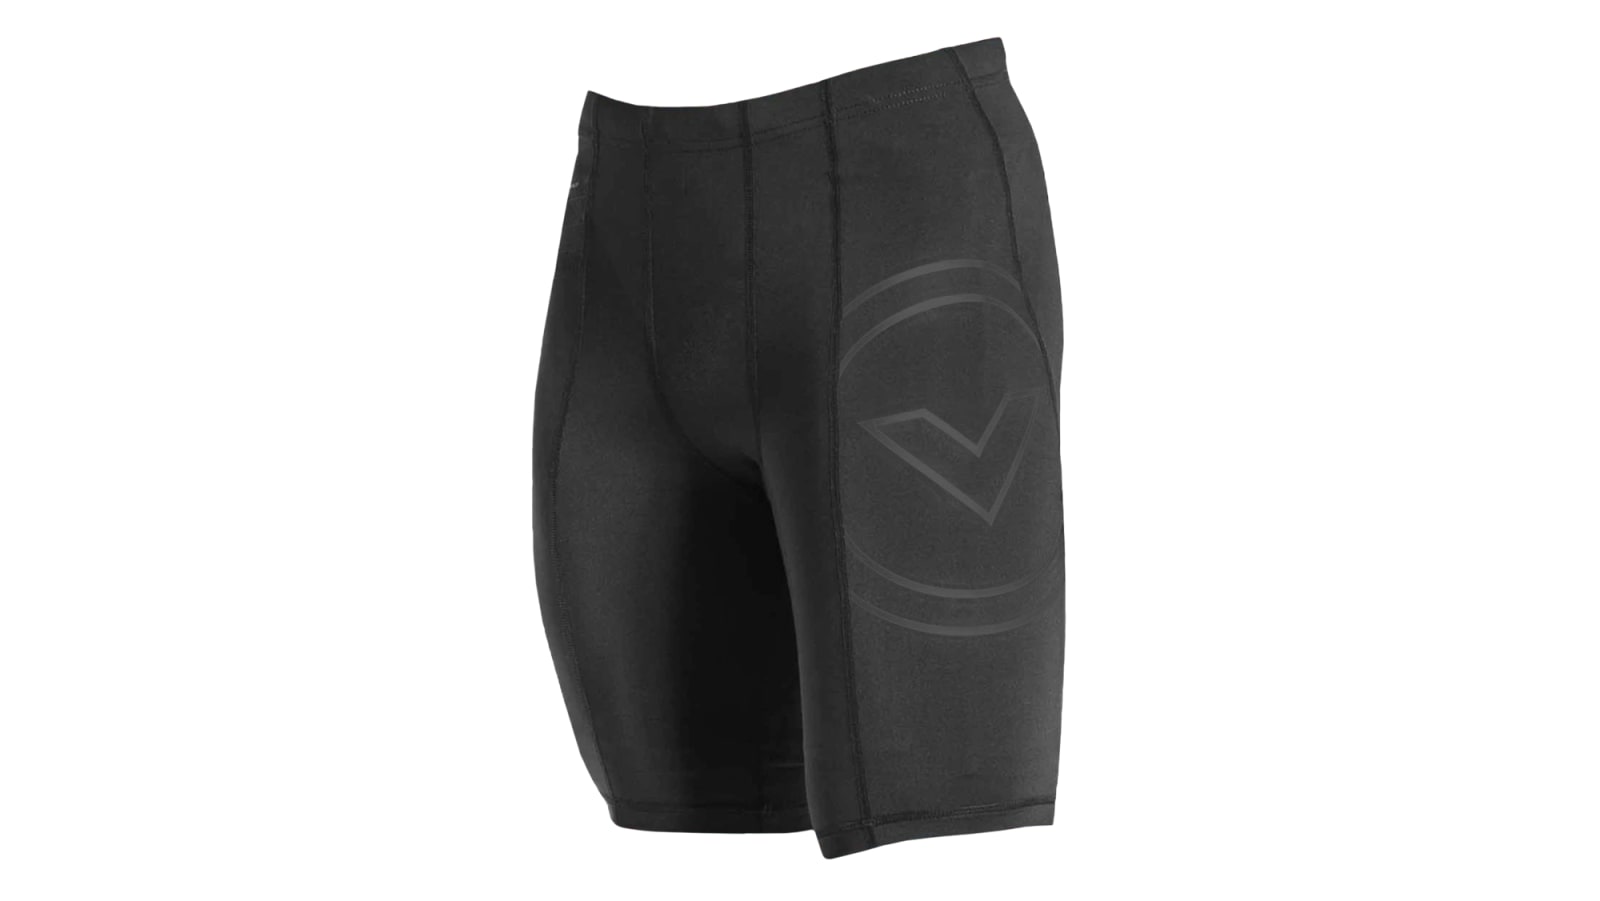 Men's sports shorts, compression shorts, men's compression shorts